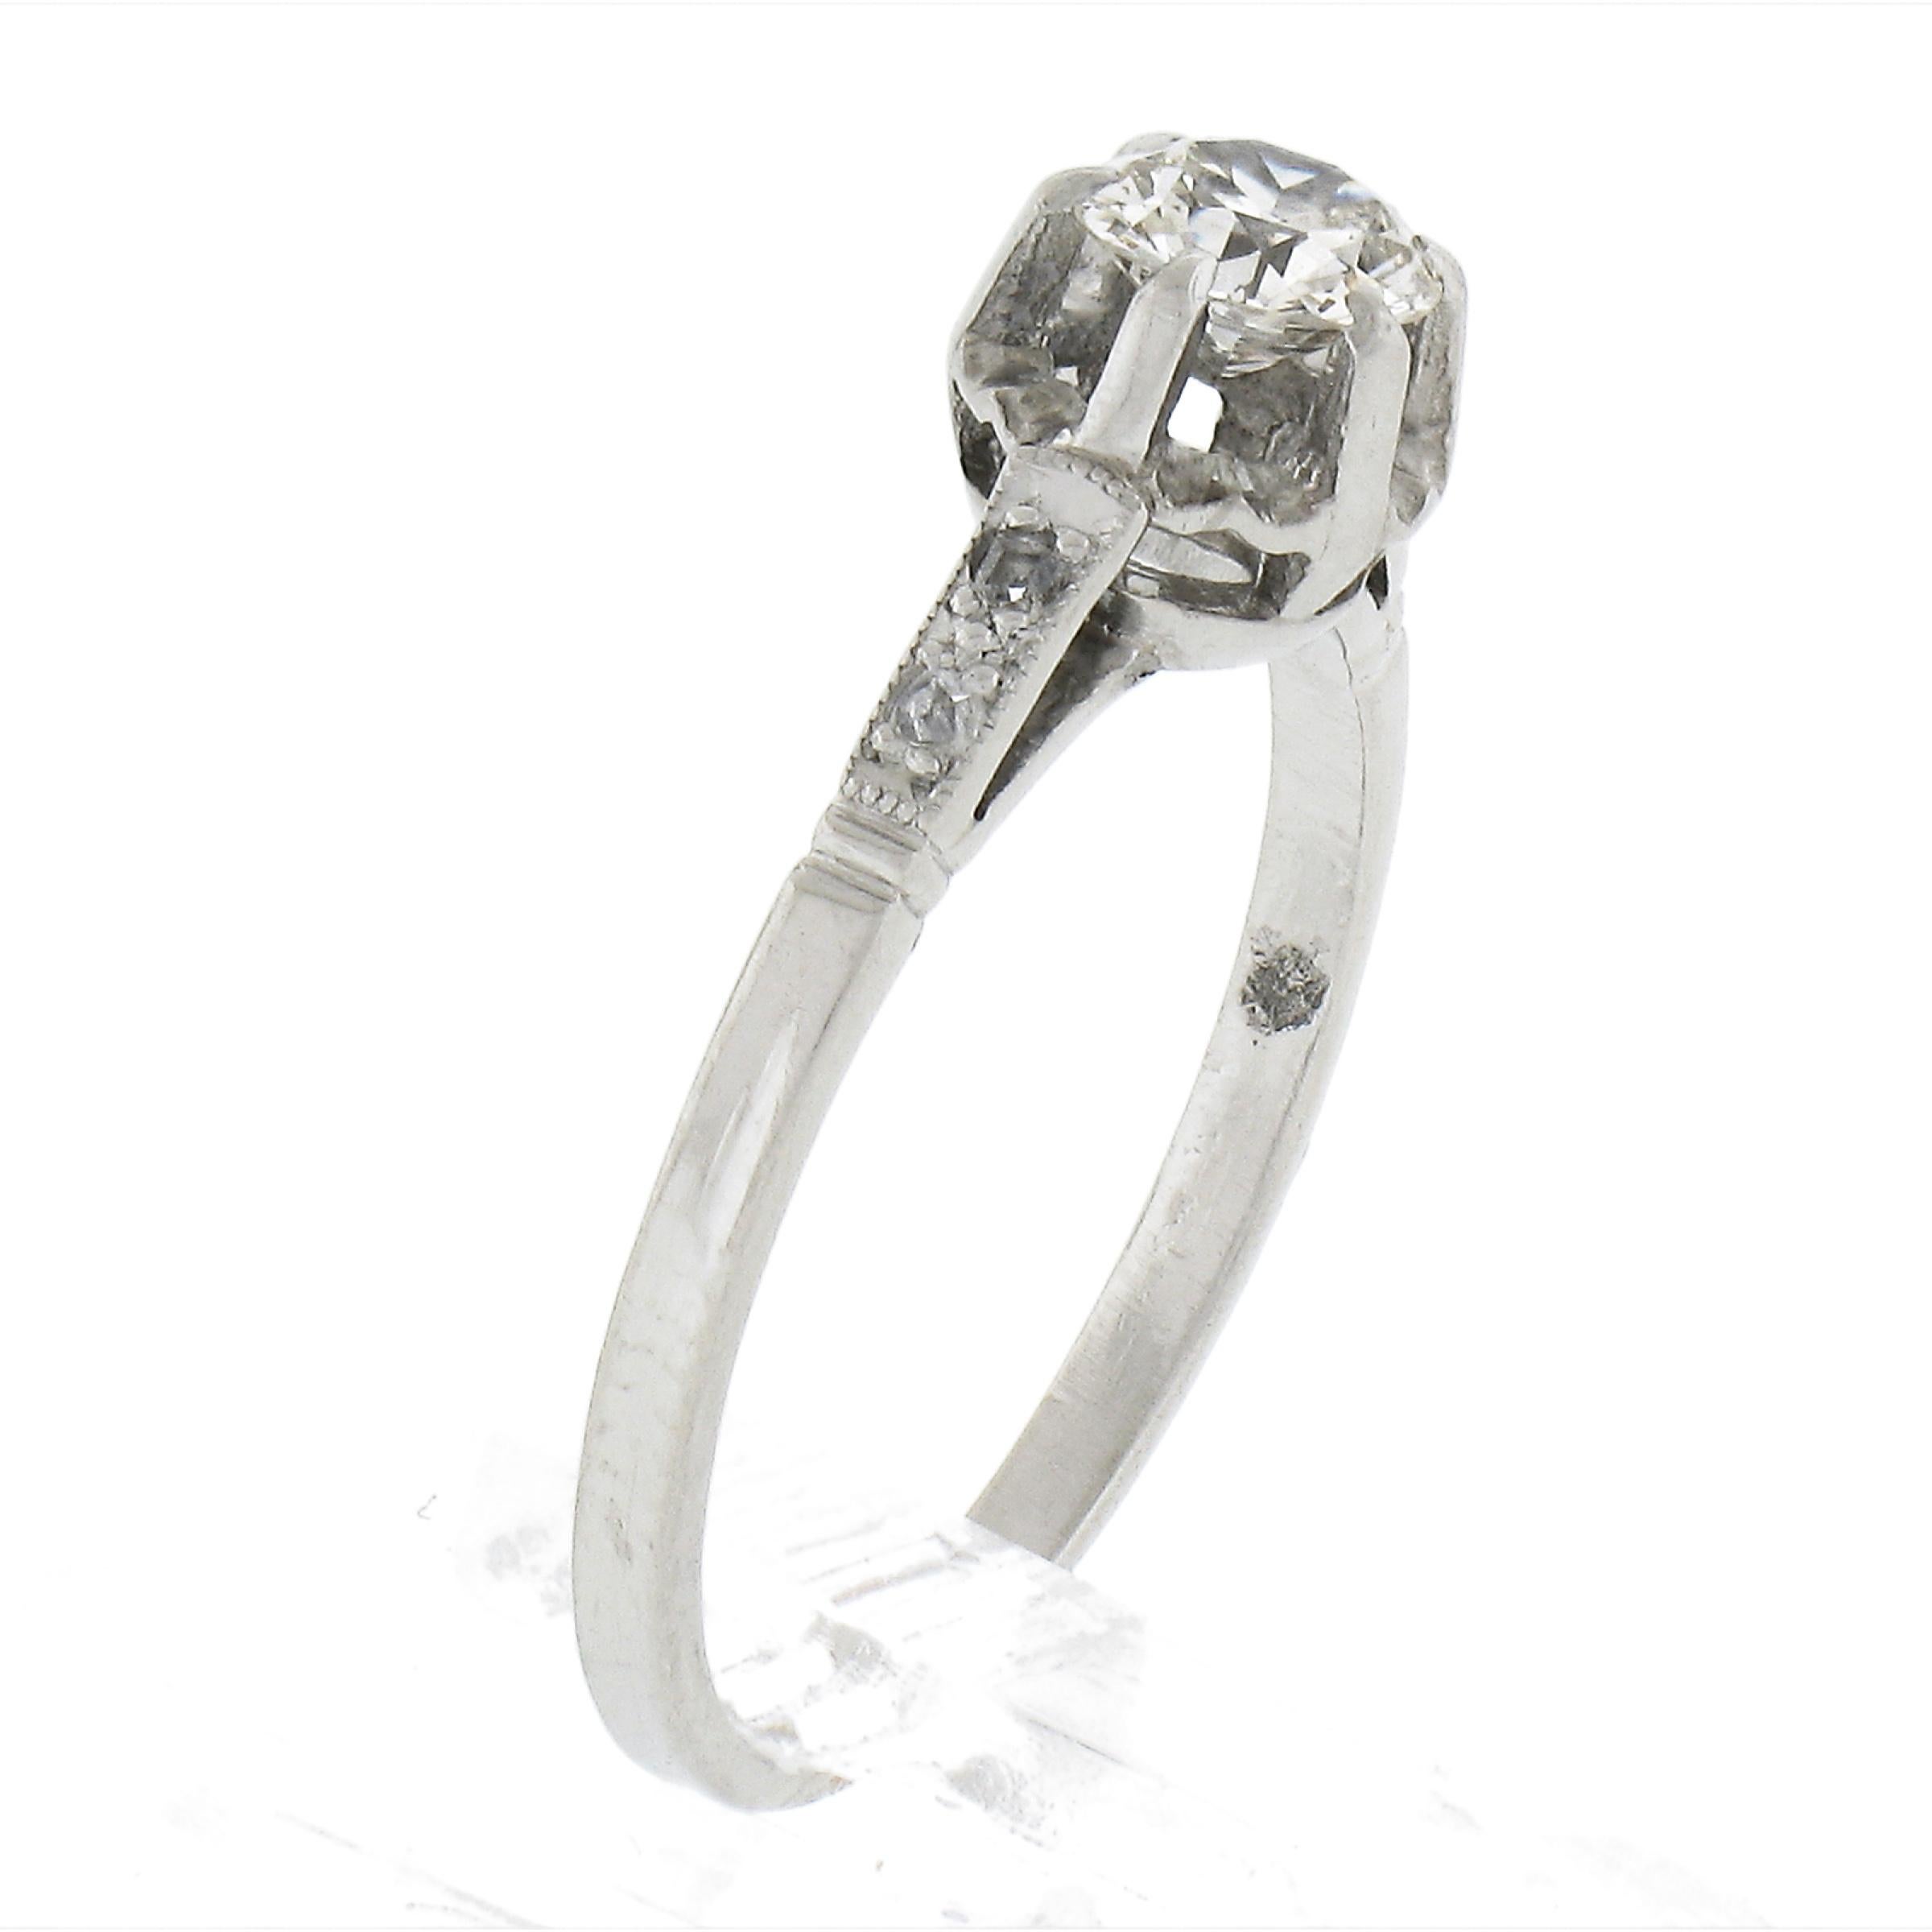 Antique Platinum 0.38ct Old Cut Diamond Solitaire Engagement Or Promise Ring 4